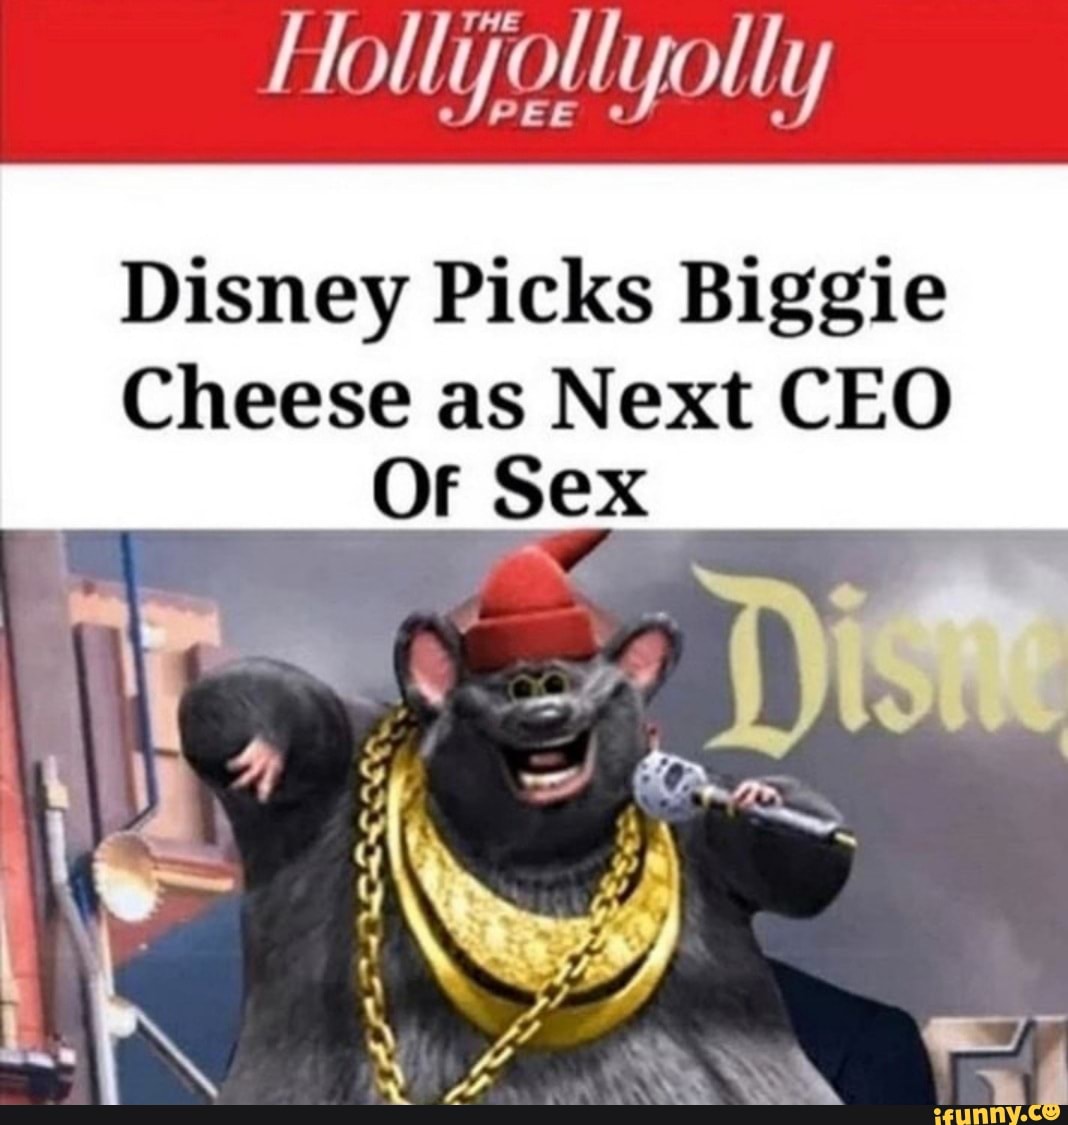 Hollijollyolly Disney Picks Biggie Cheese as Next CEO Of Sex - iFunny Brazil